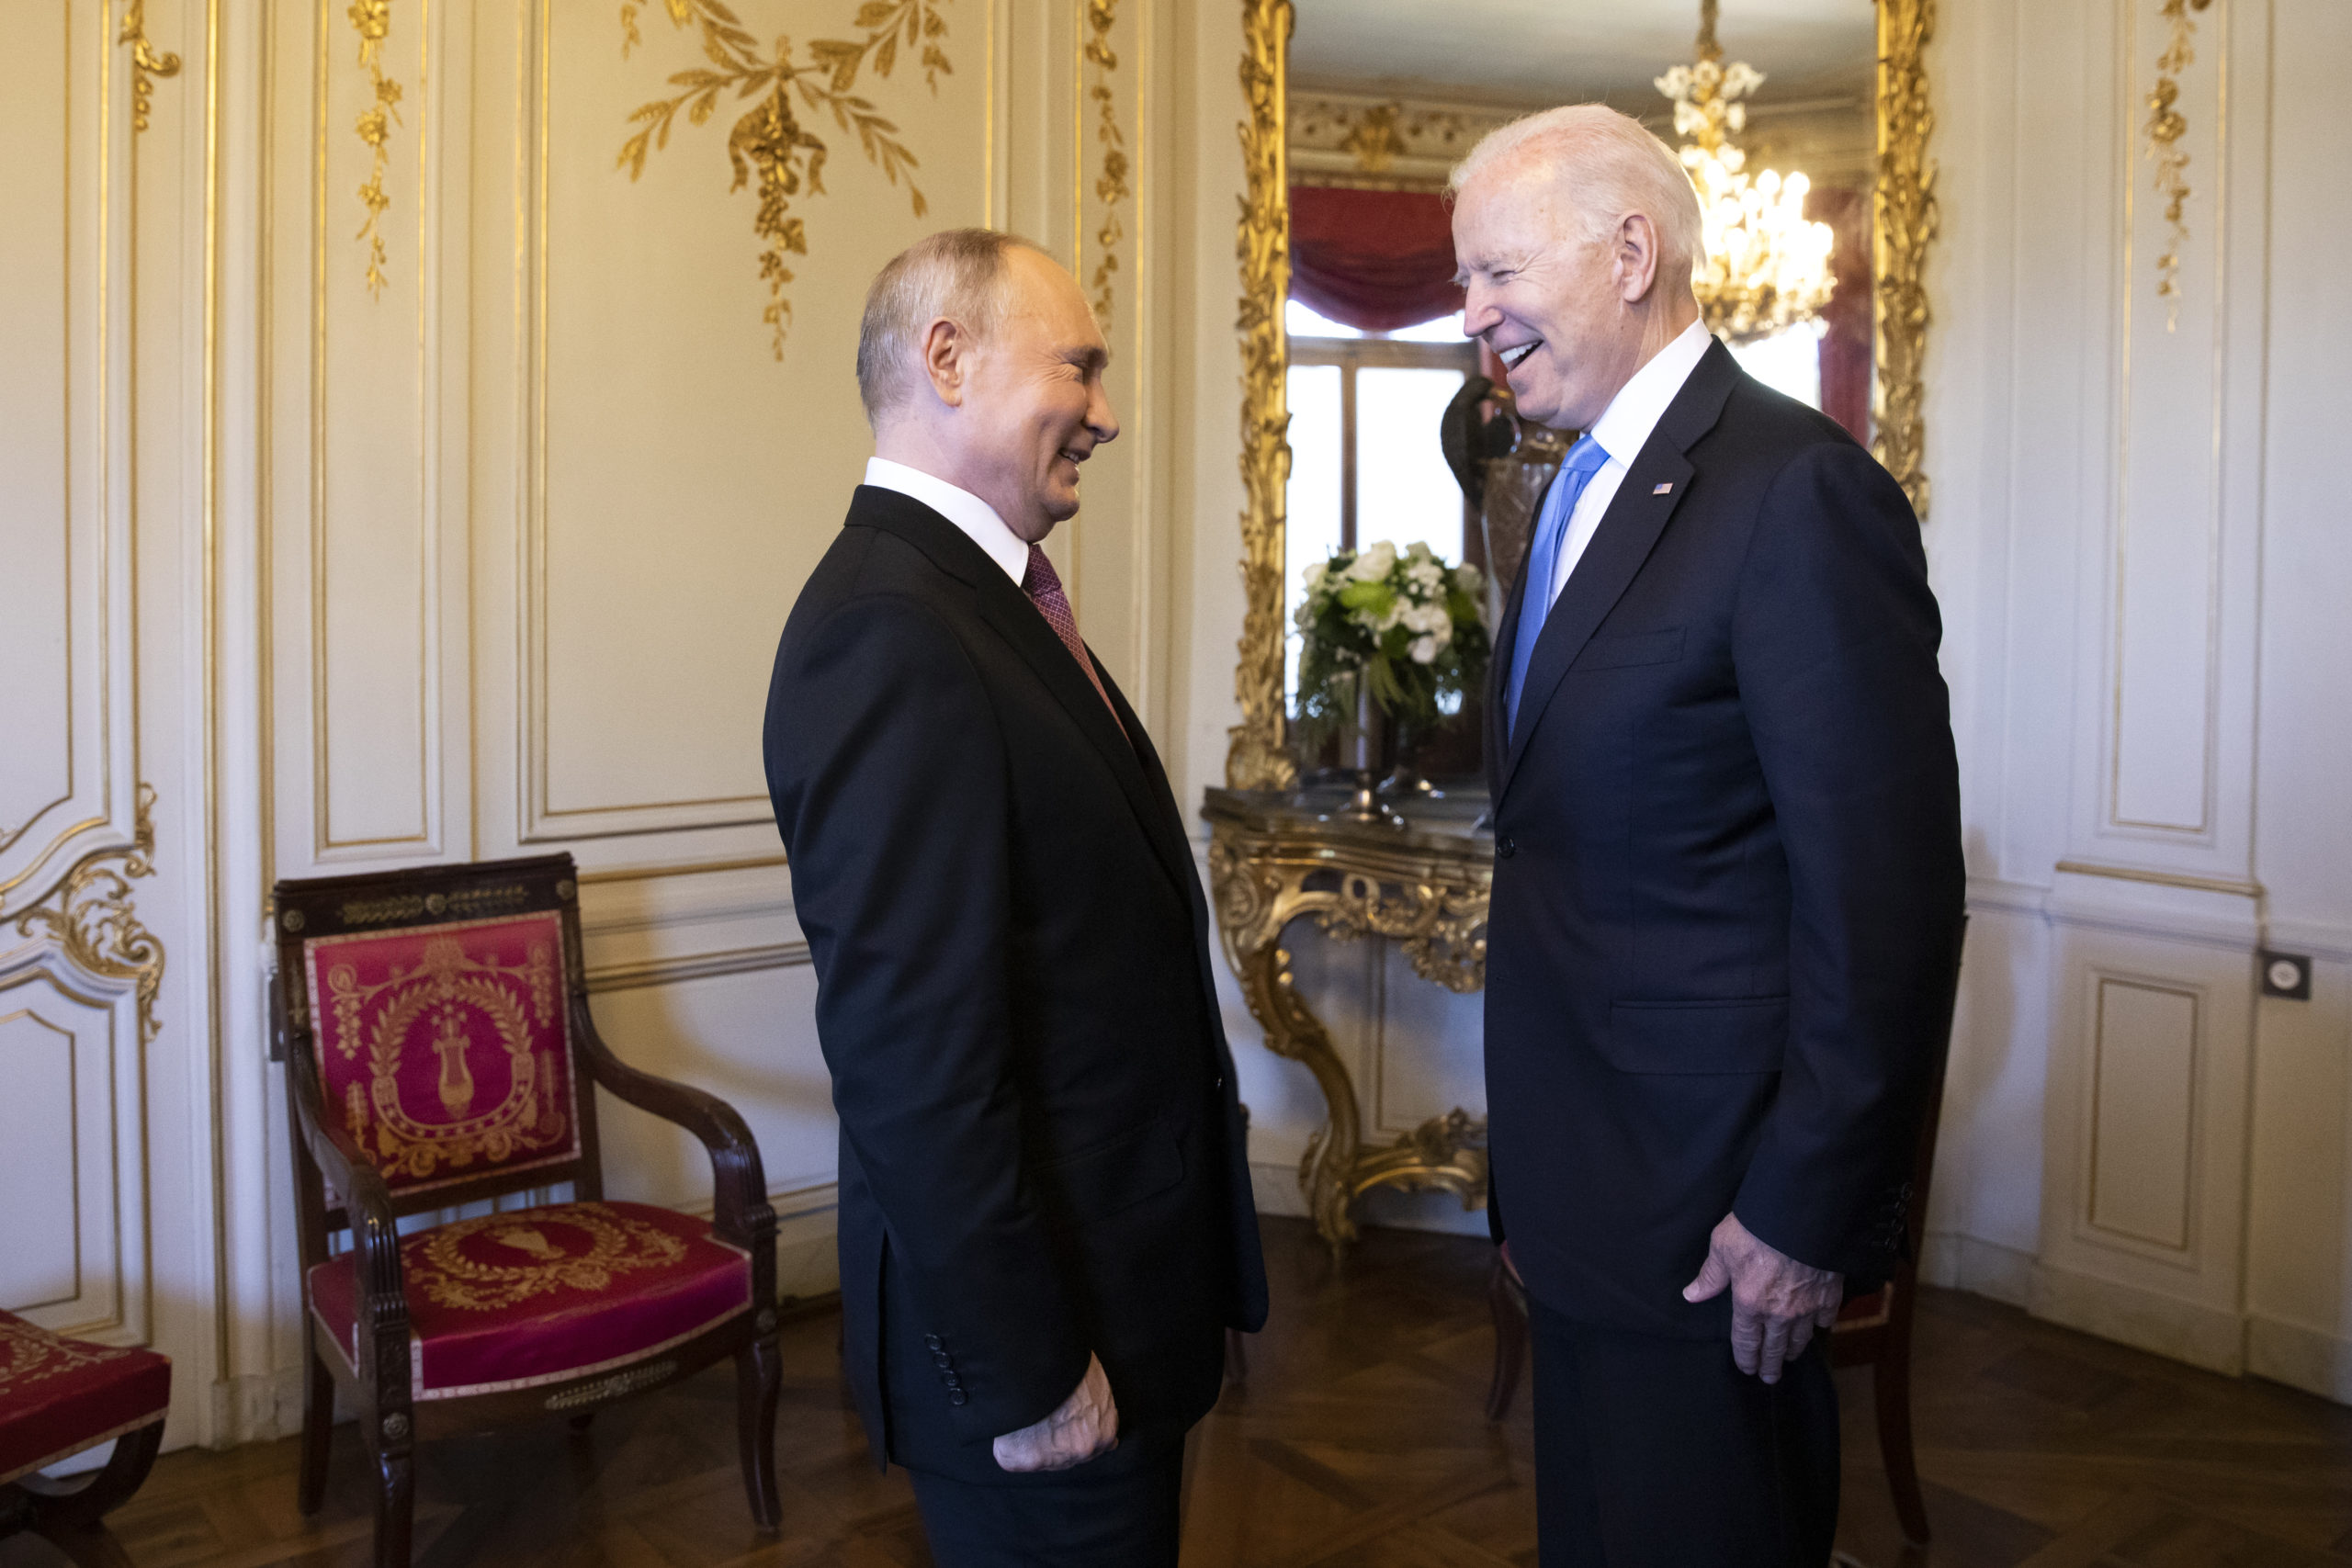 President Joe Biden and Russian President Vladimir Putin meet during the U.S.-Russia summit on June 16 in Geneva, Switzerland. (Peter Klaunzer/Pool/Keystone via Getty Images)